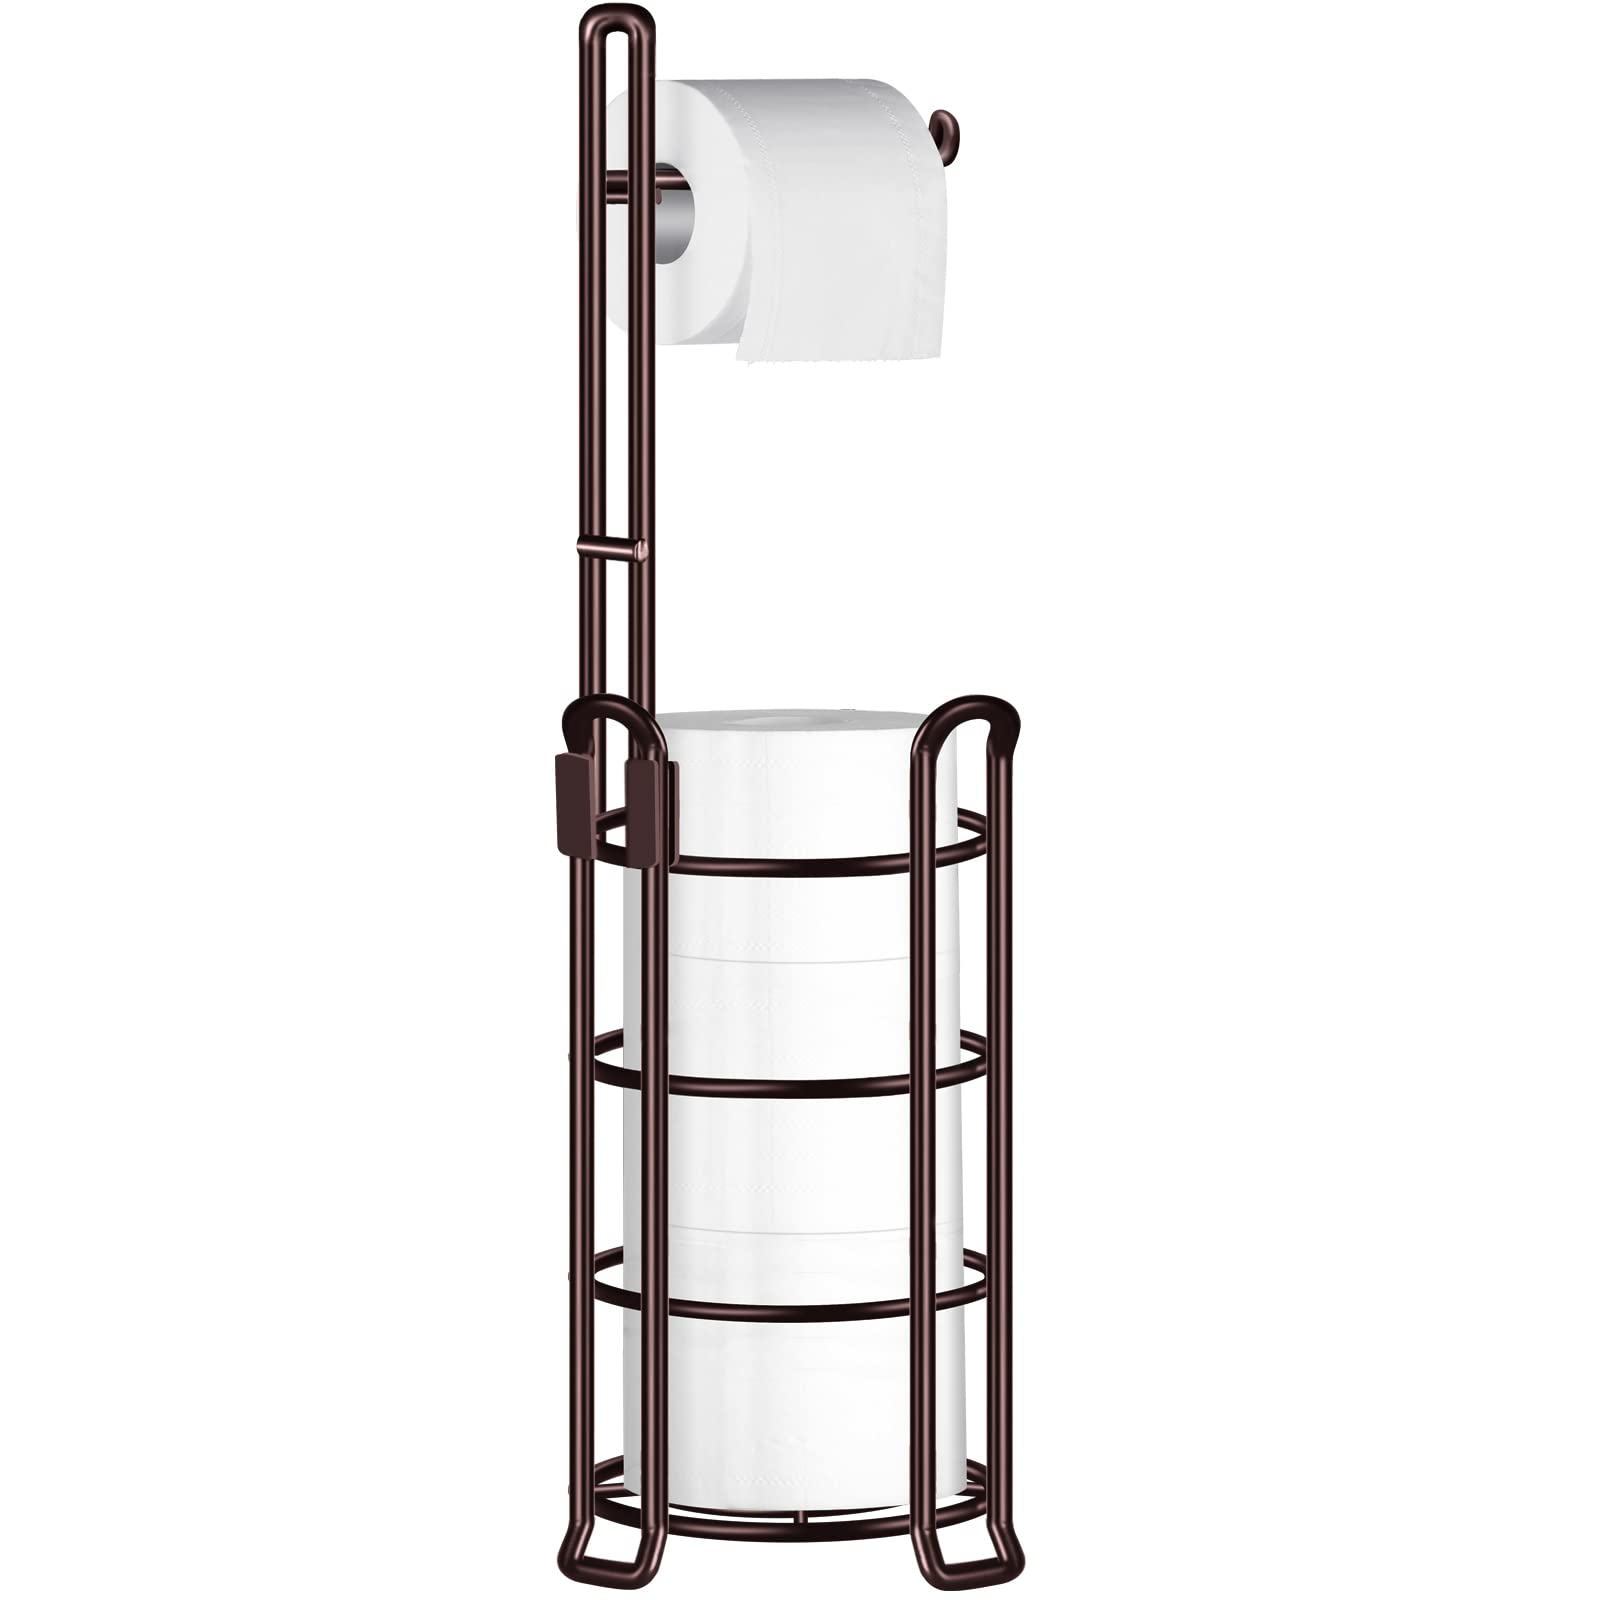 Freestanding Toilet Roll & Spare Paper Holder